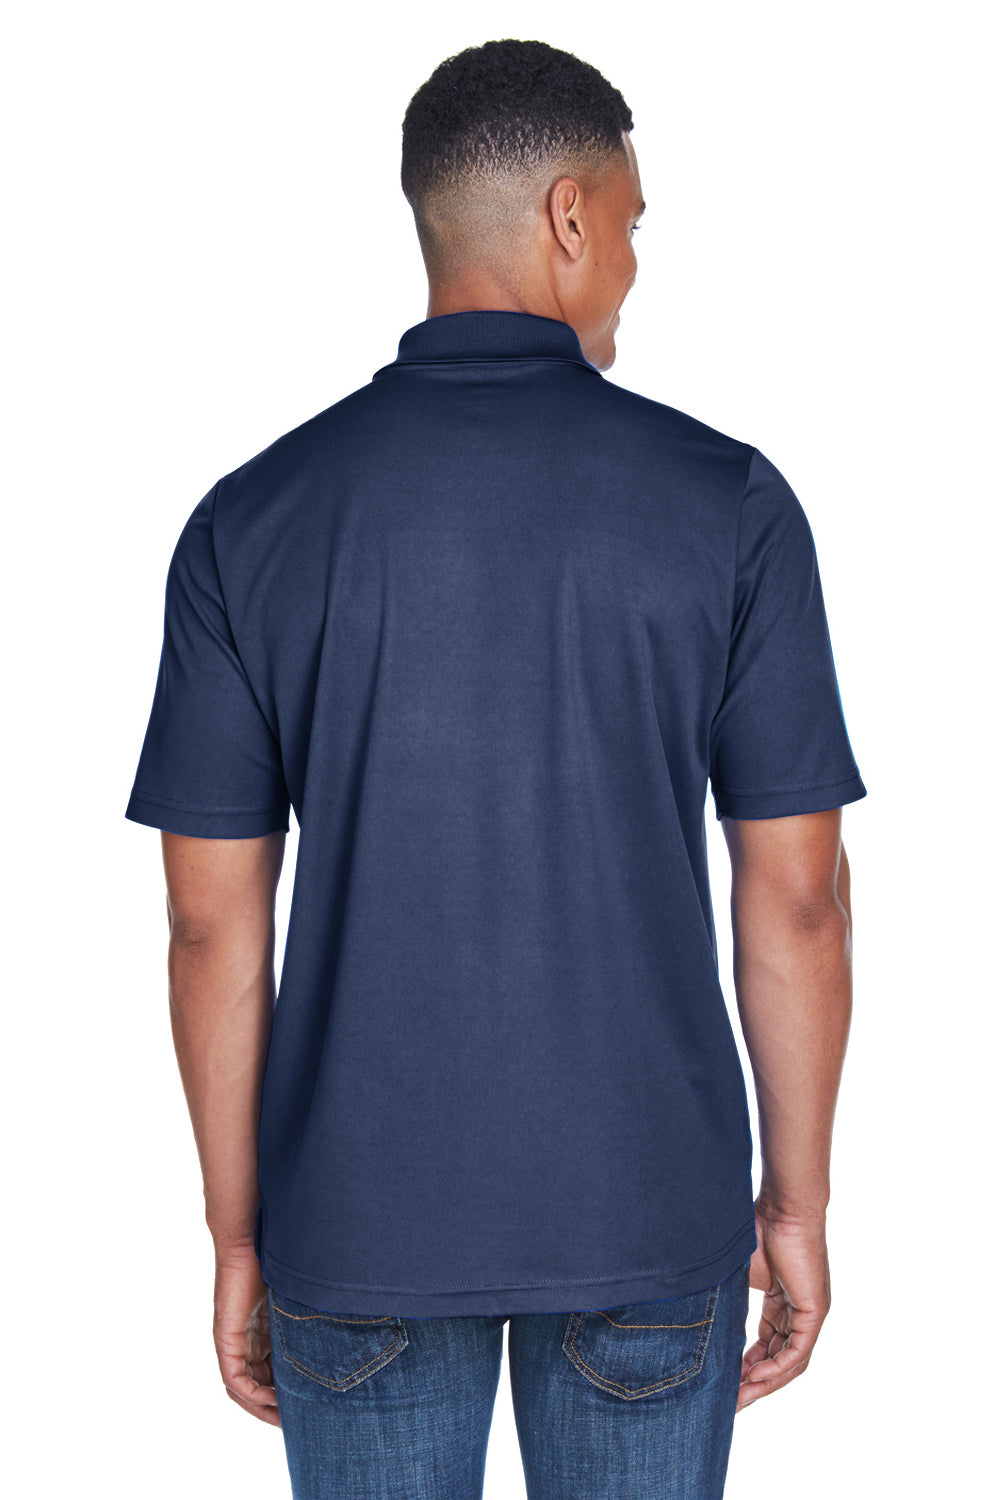 Core 365 88181P Mens Origin Performance Moisture Wicking Short Sleeve Polo Shirt w/ Pocket Navy Blue Back